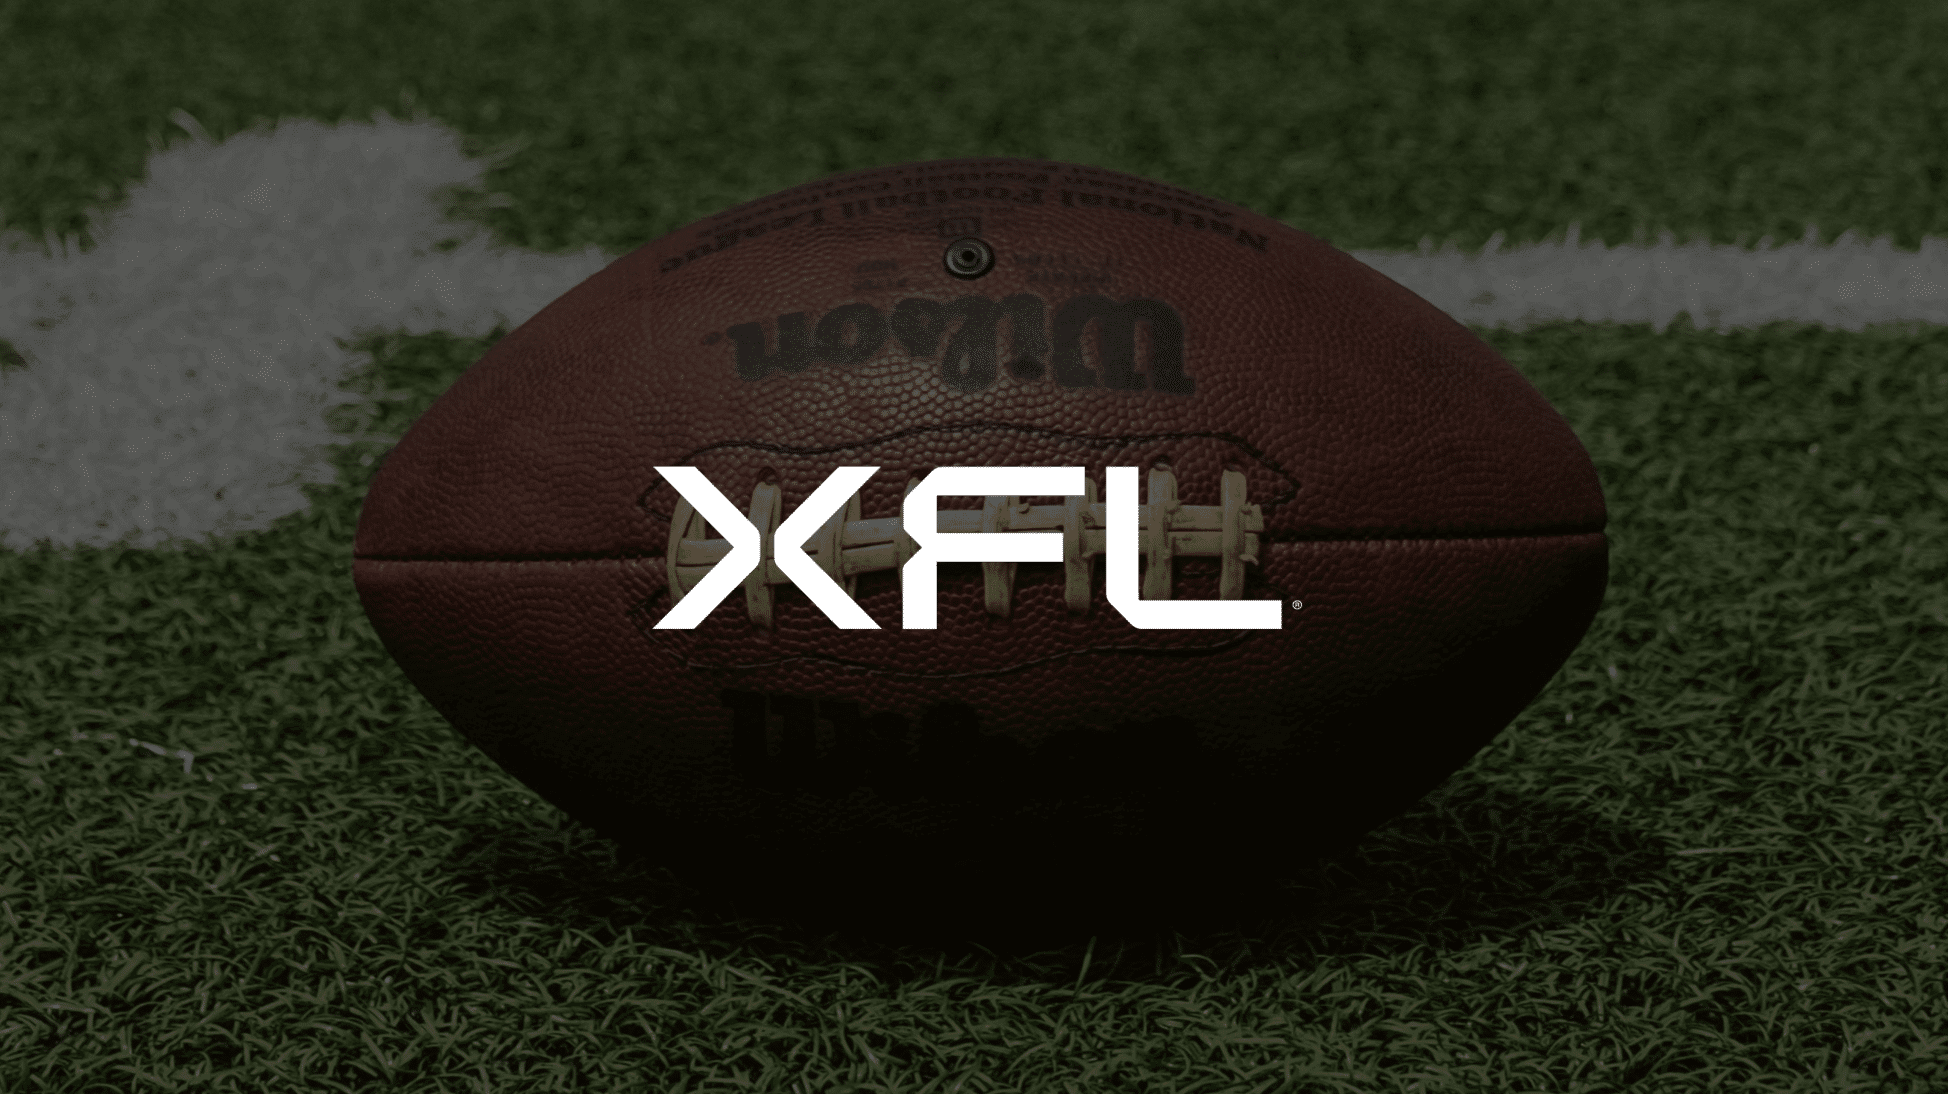 xcl logo over football on football field